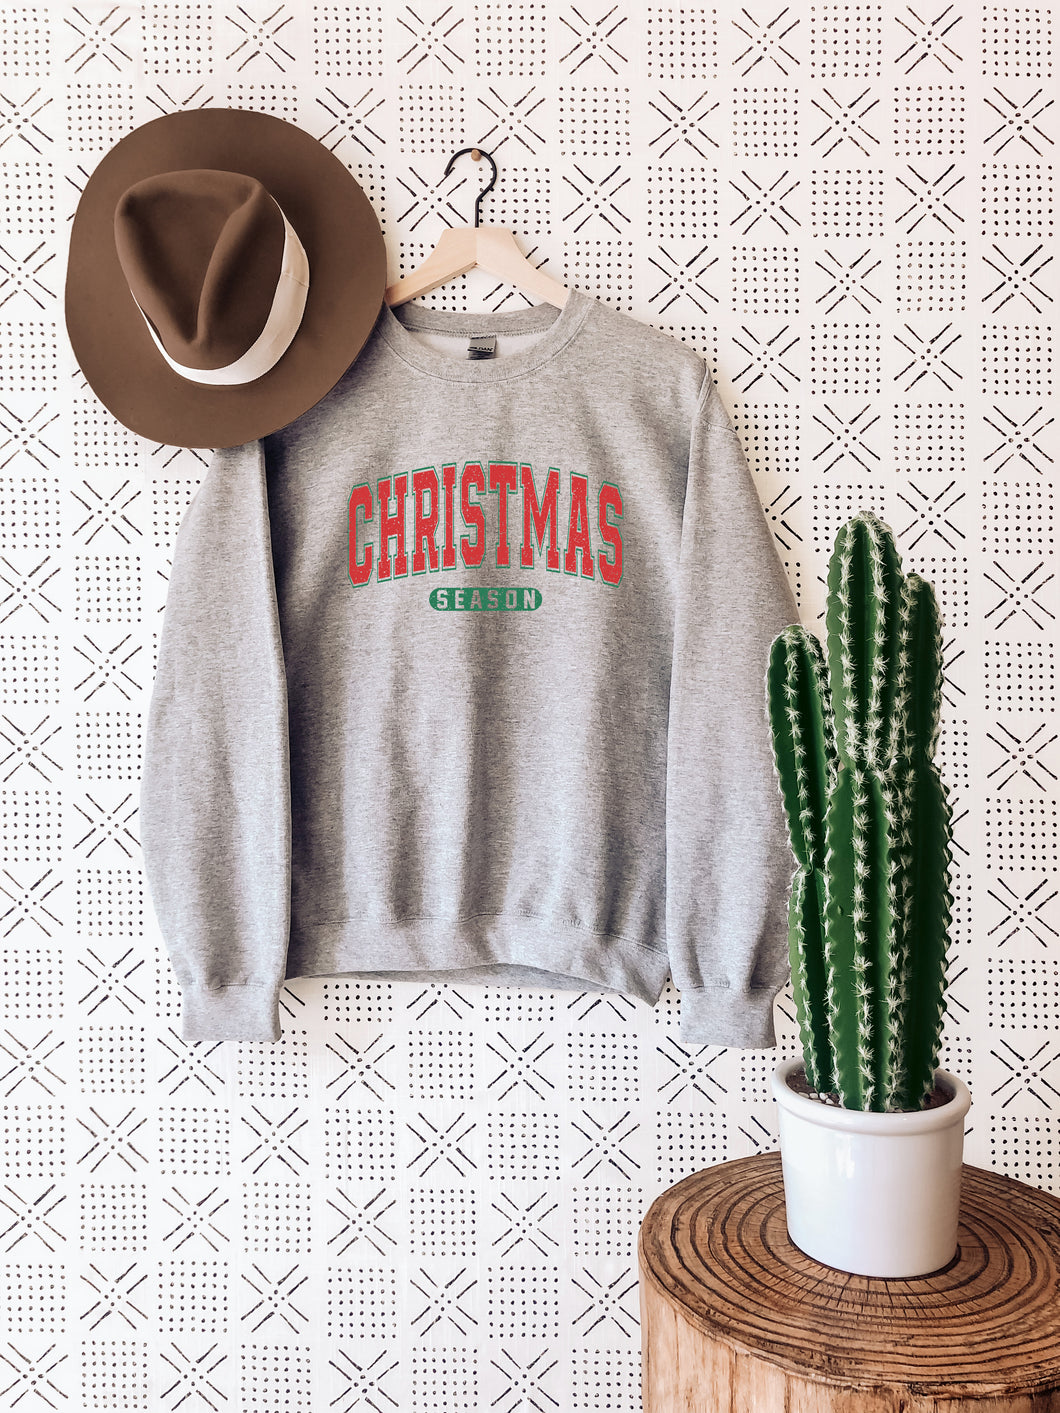 Christmas Season Sweater